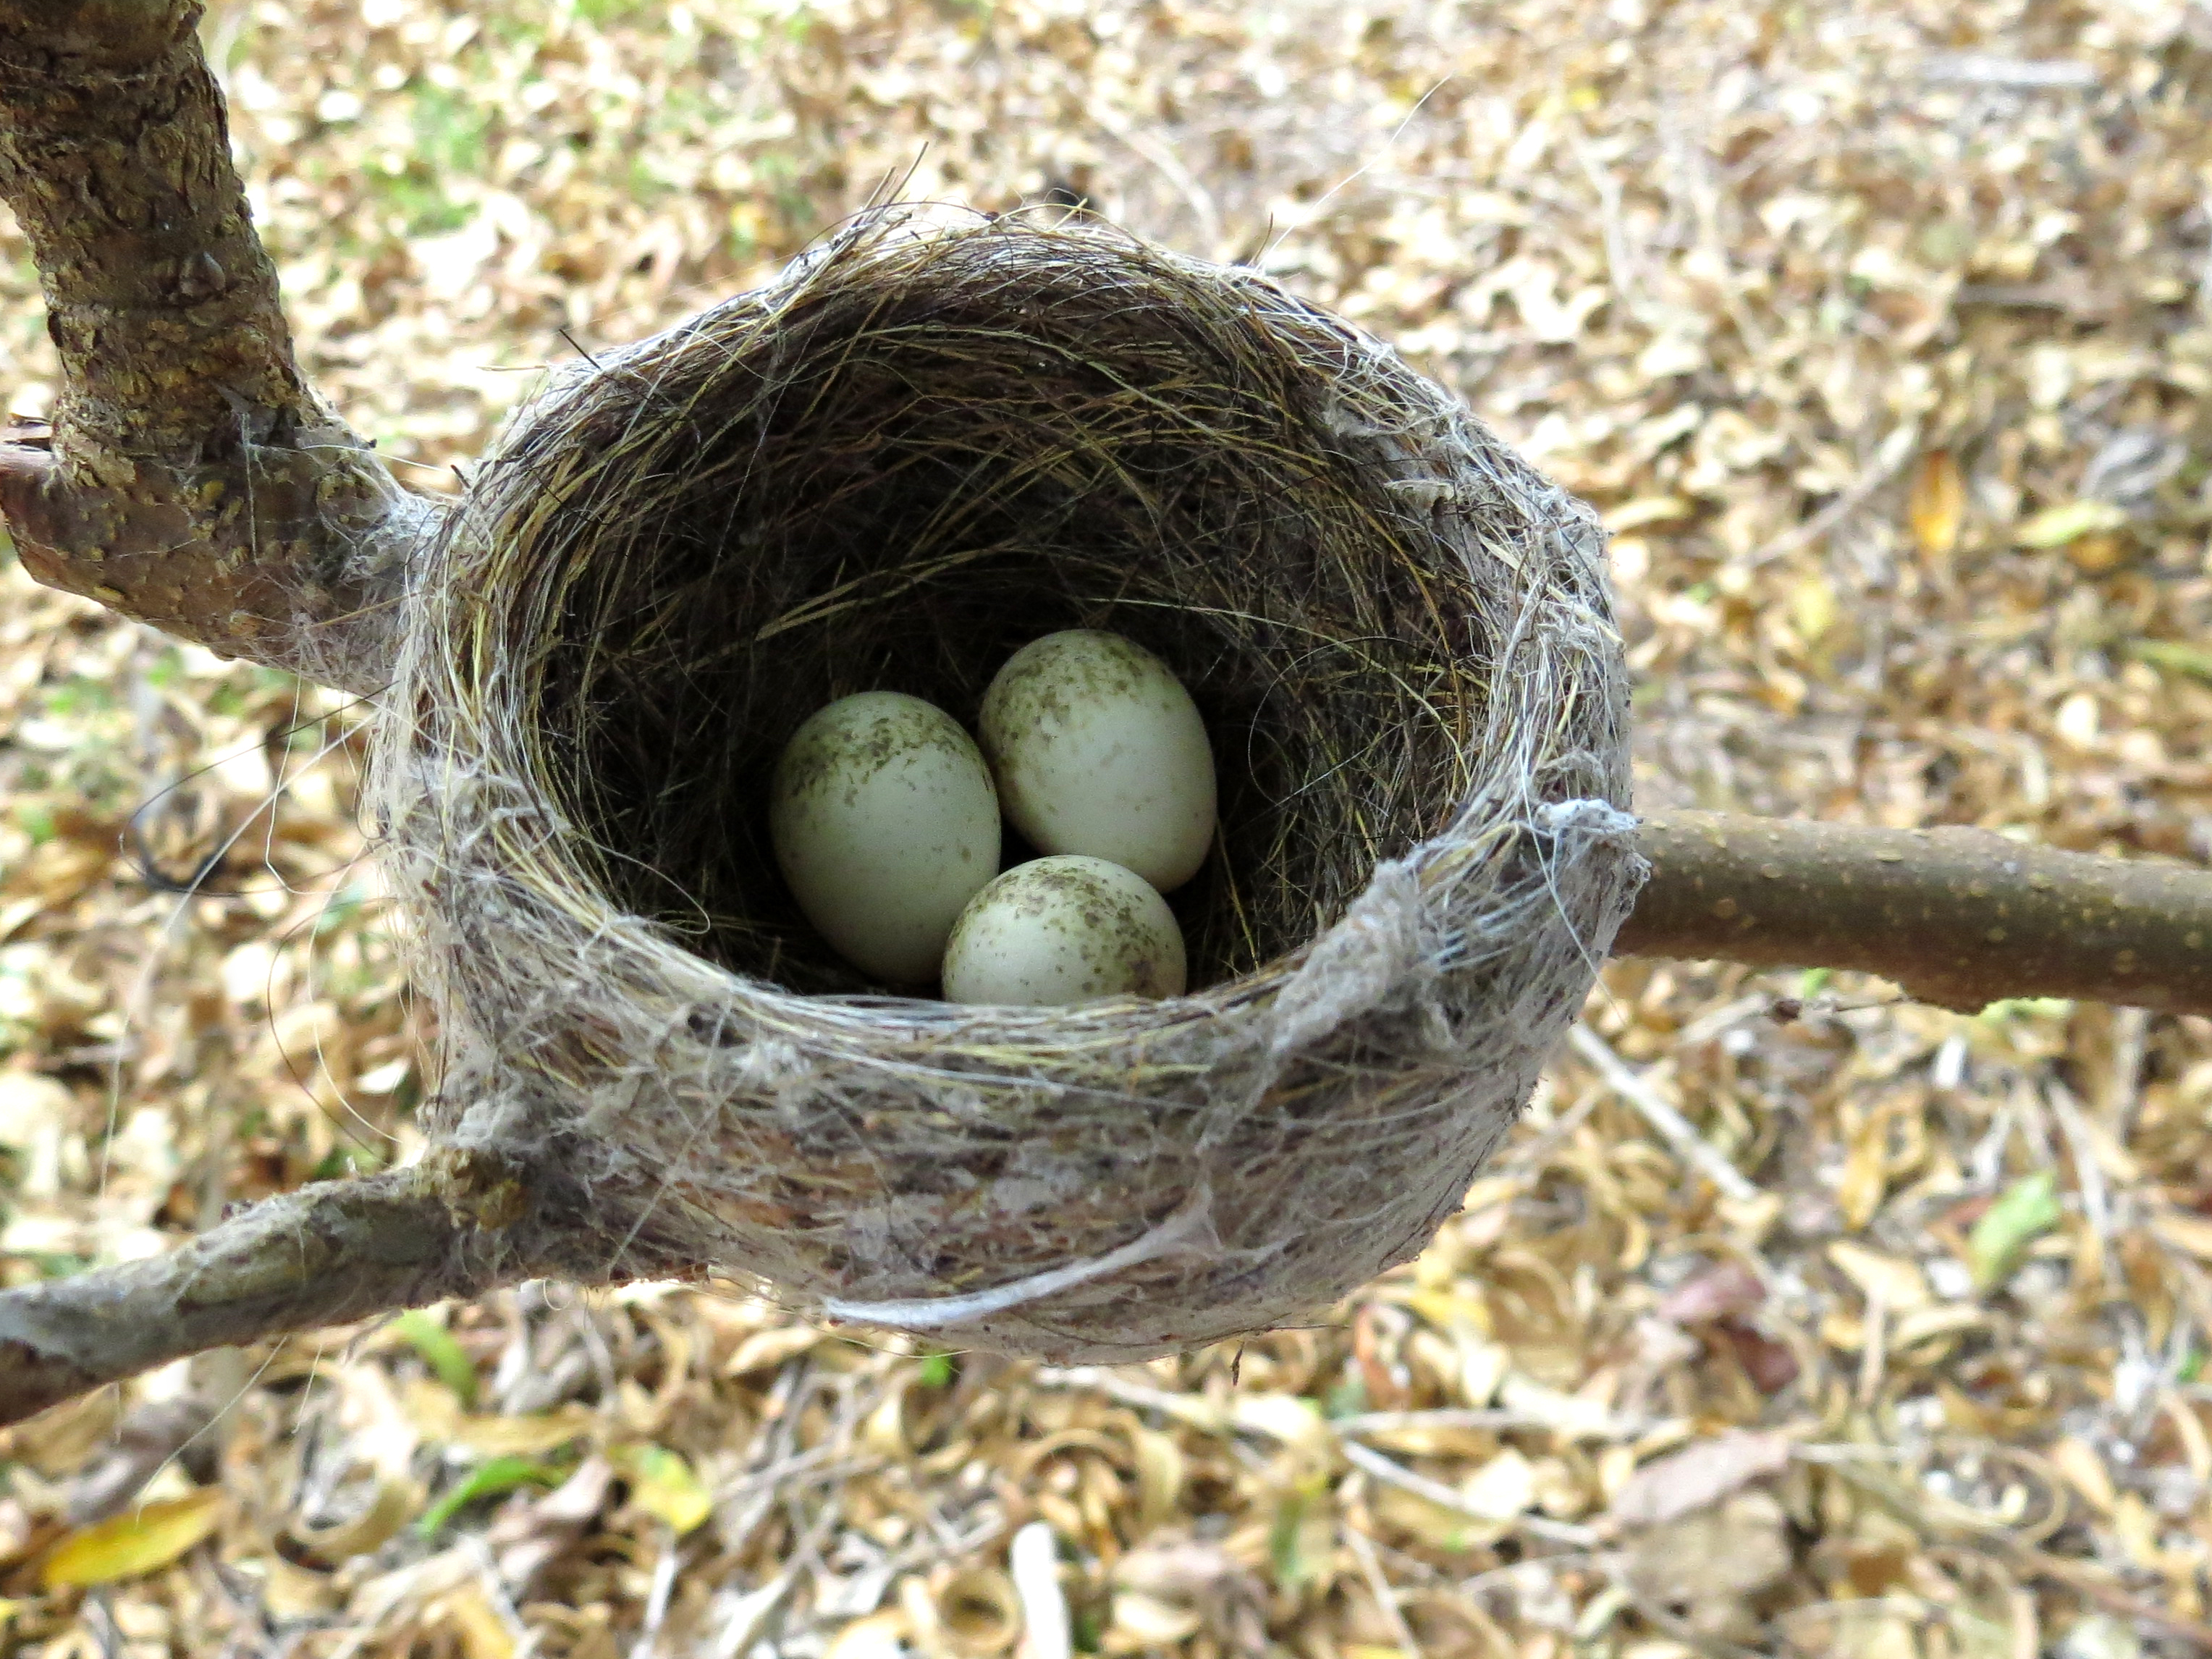 Their nests. Гнездо Garden story fb-100cm.